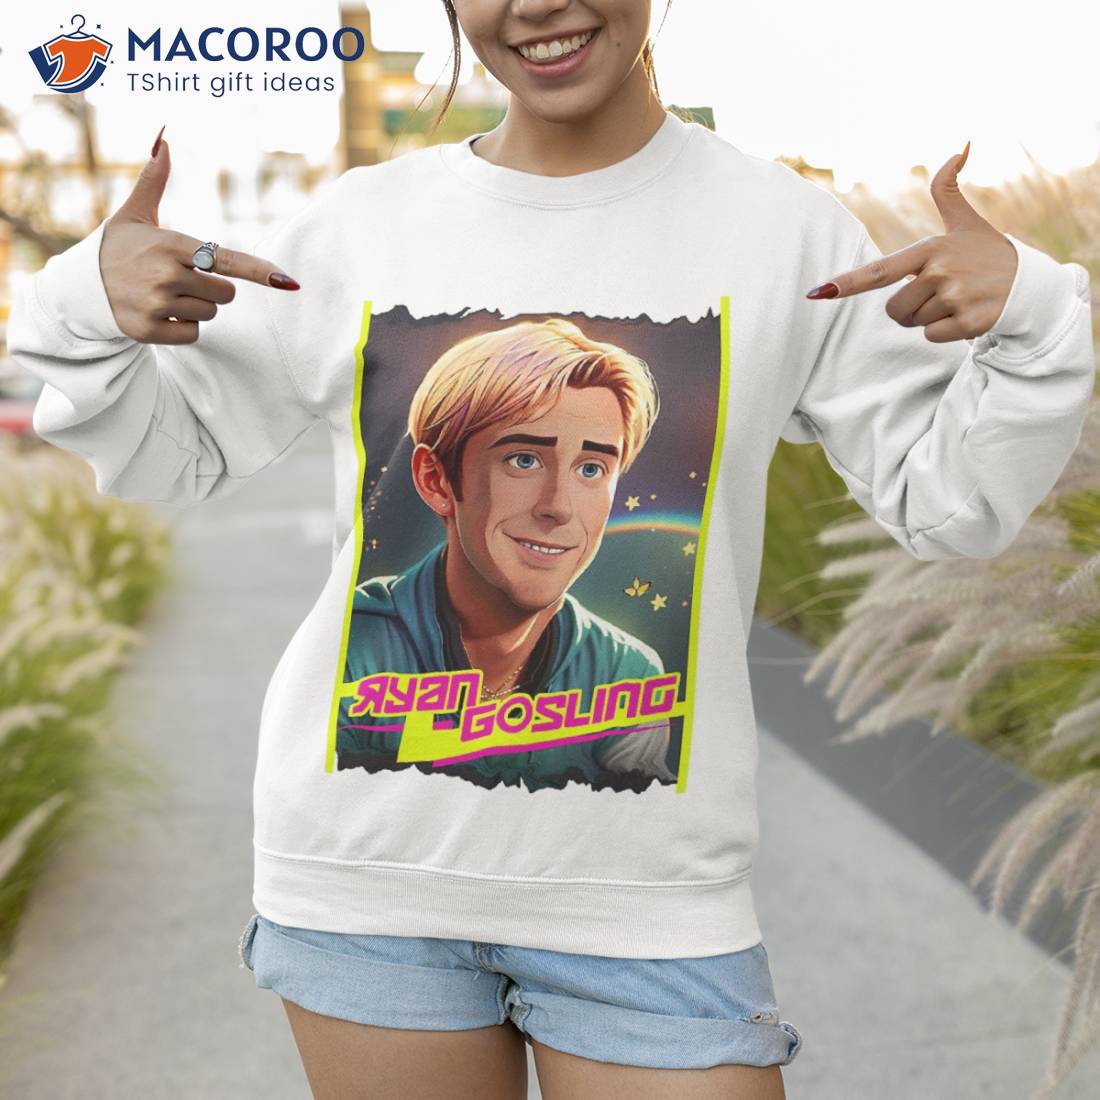 https://images.macoroo.com/wp-content/uploads/2023/05/movie-2023-ryan-gosling-graphic-illustration-design-by-ironpalette-shirt-sweatshirt-2.jpg